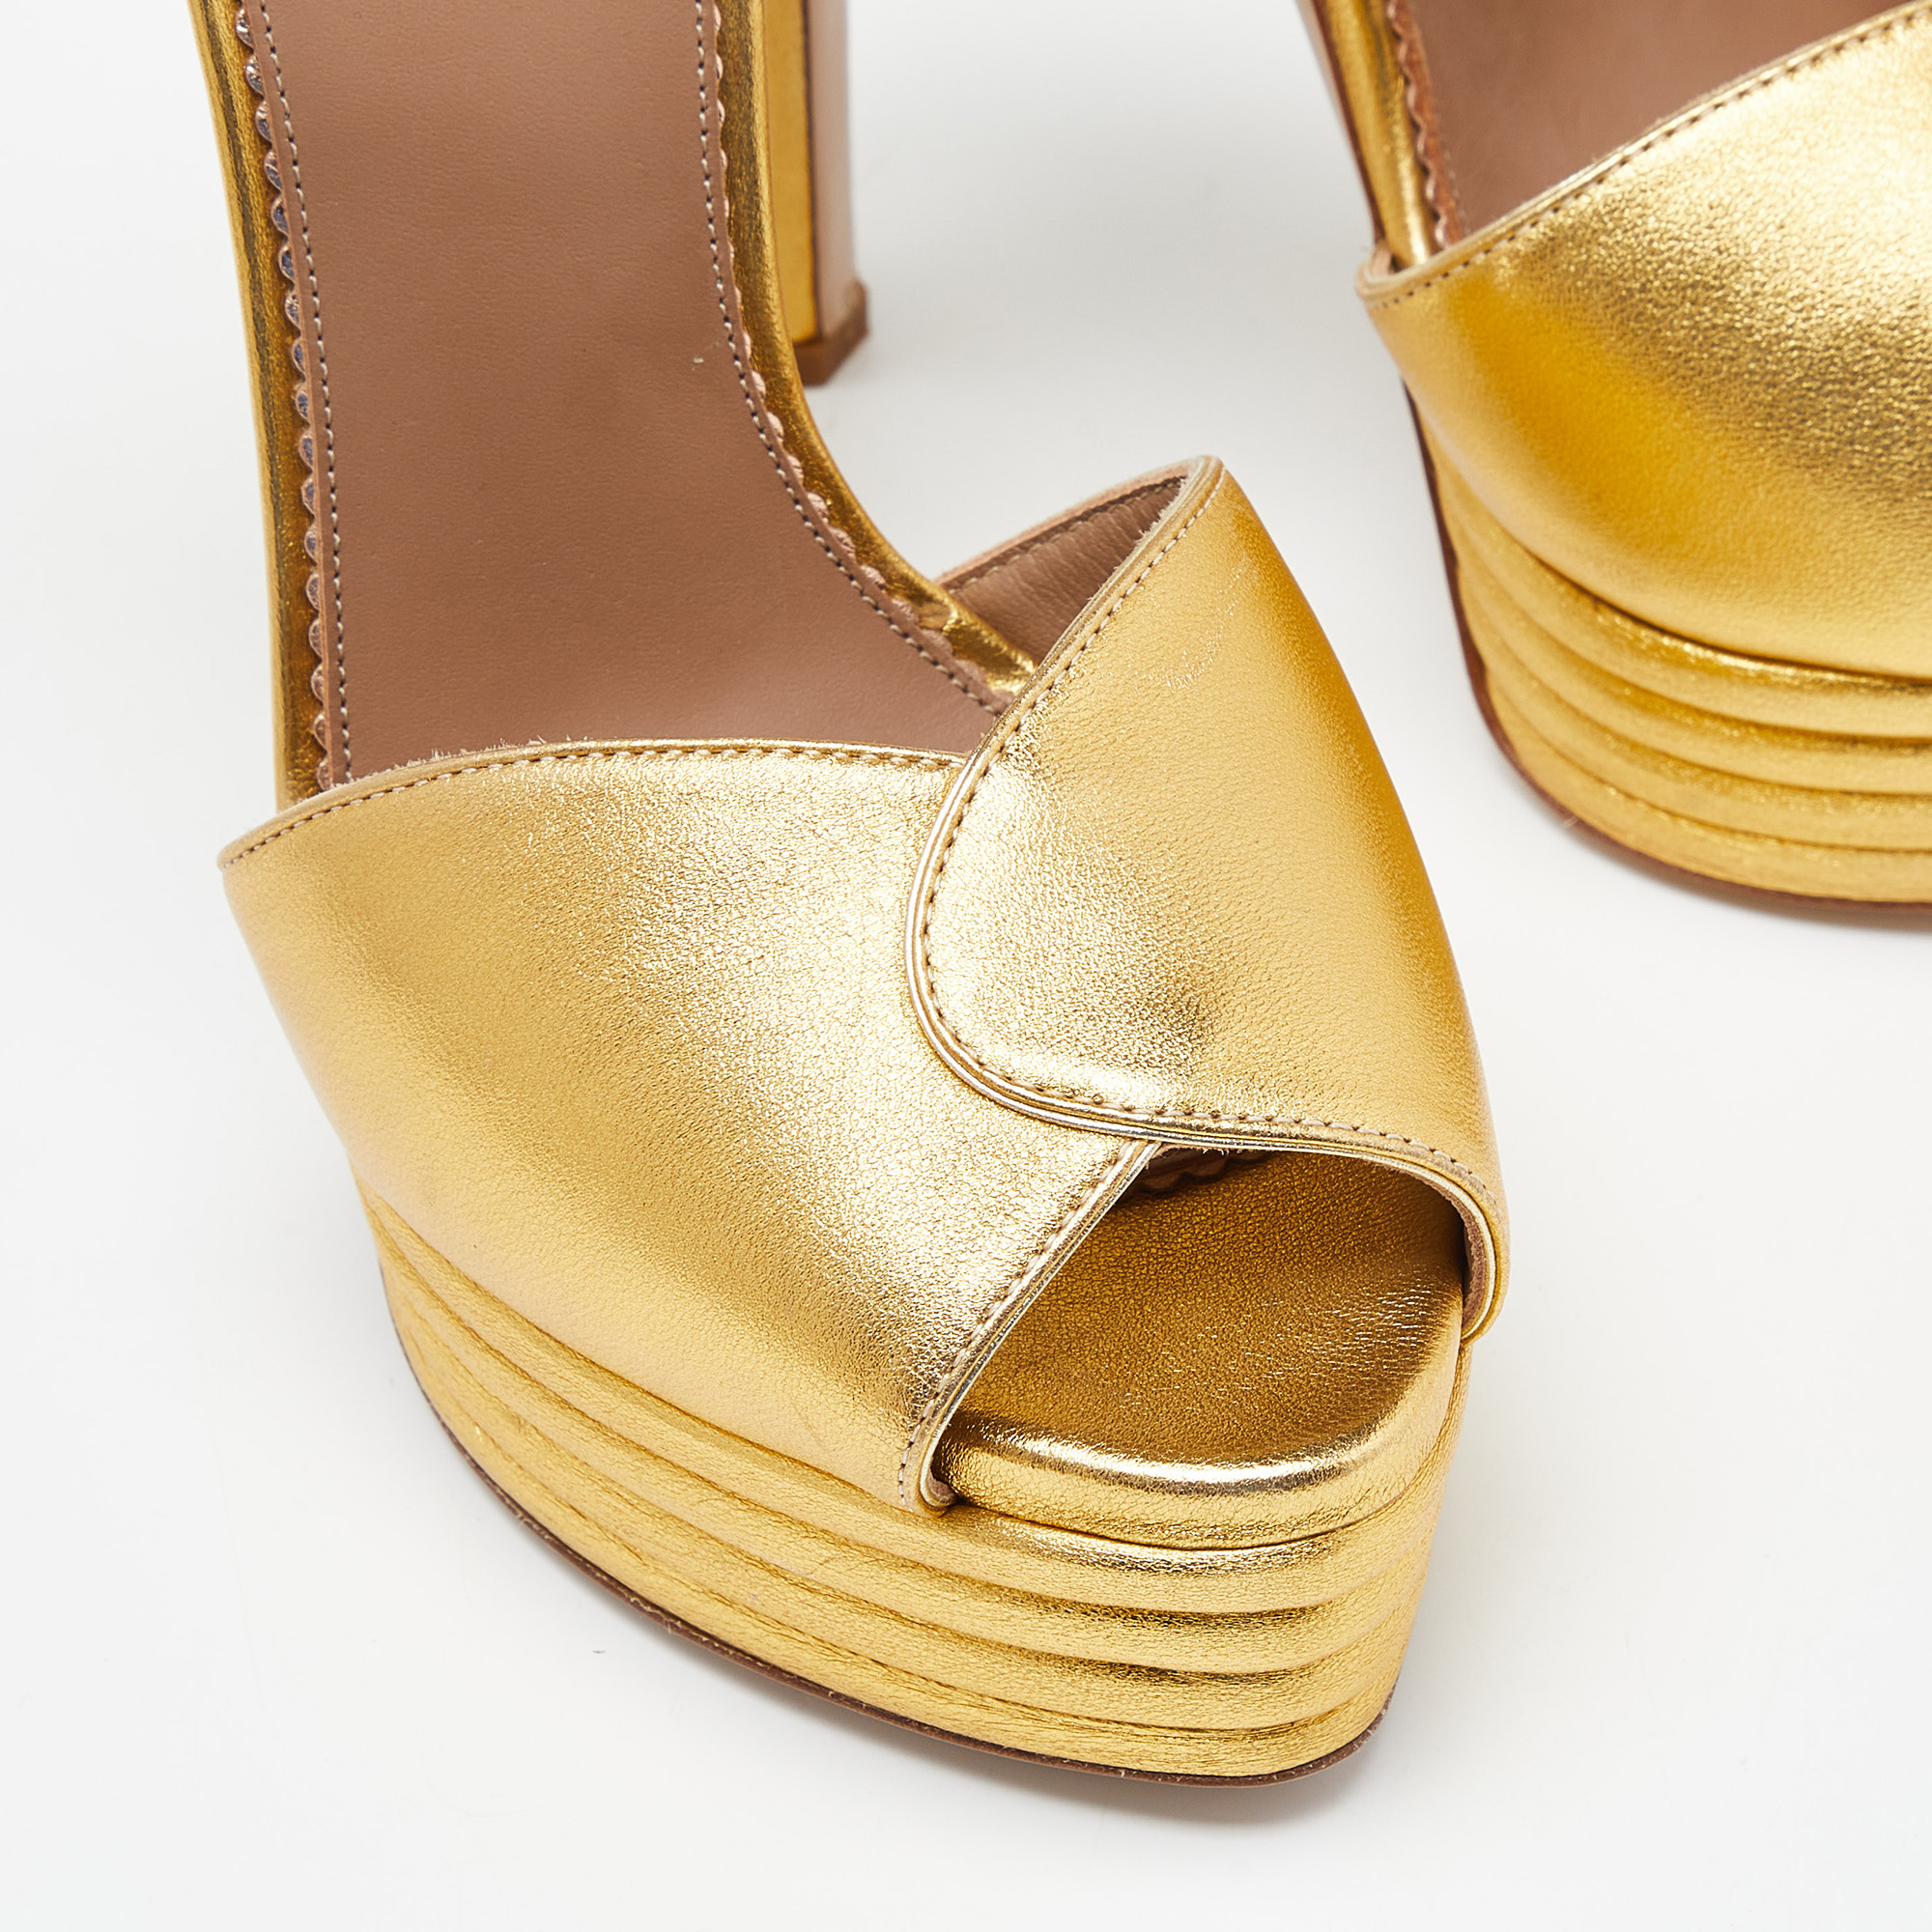 Le Silla Gold Leather Platform Ankle Strap Sandals Size 39